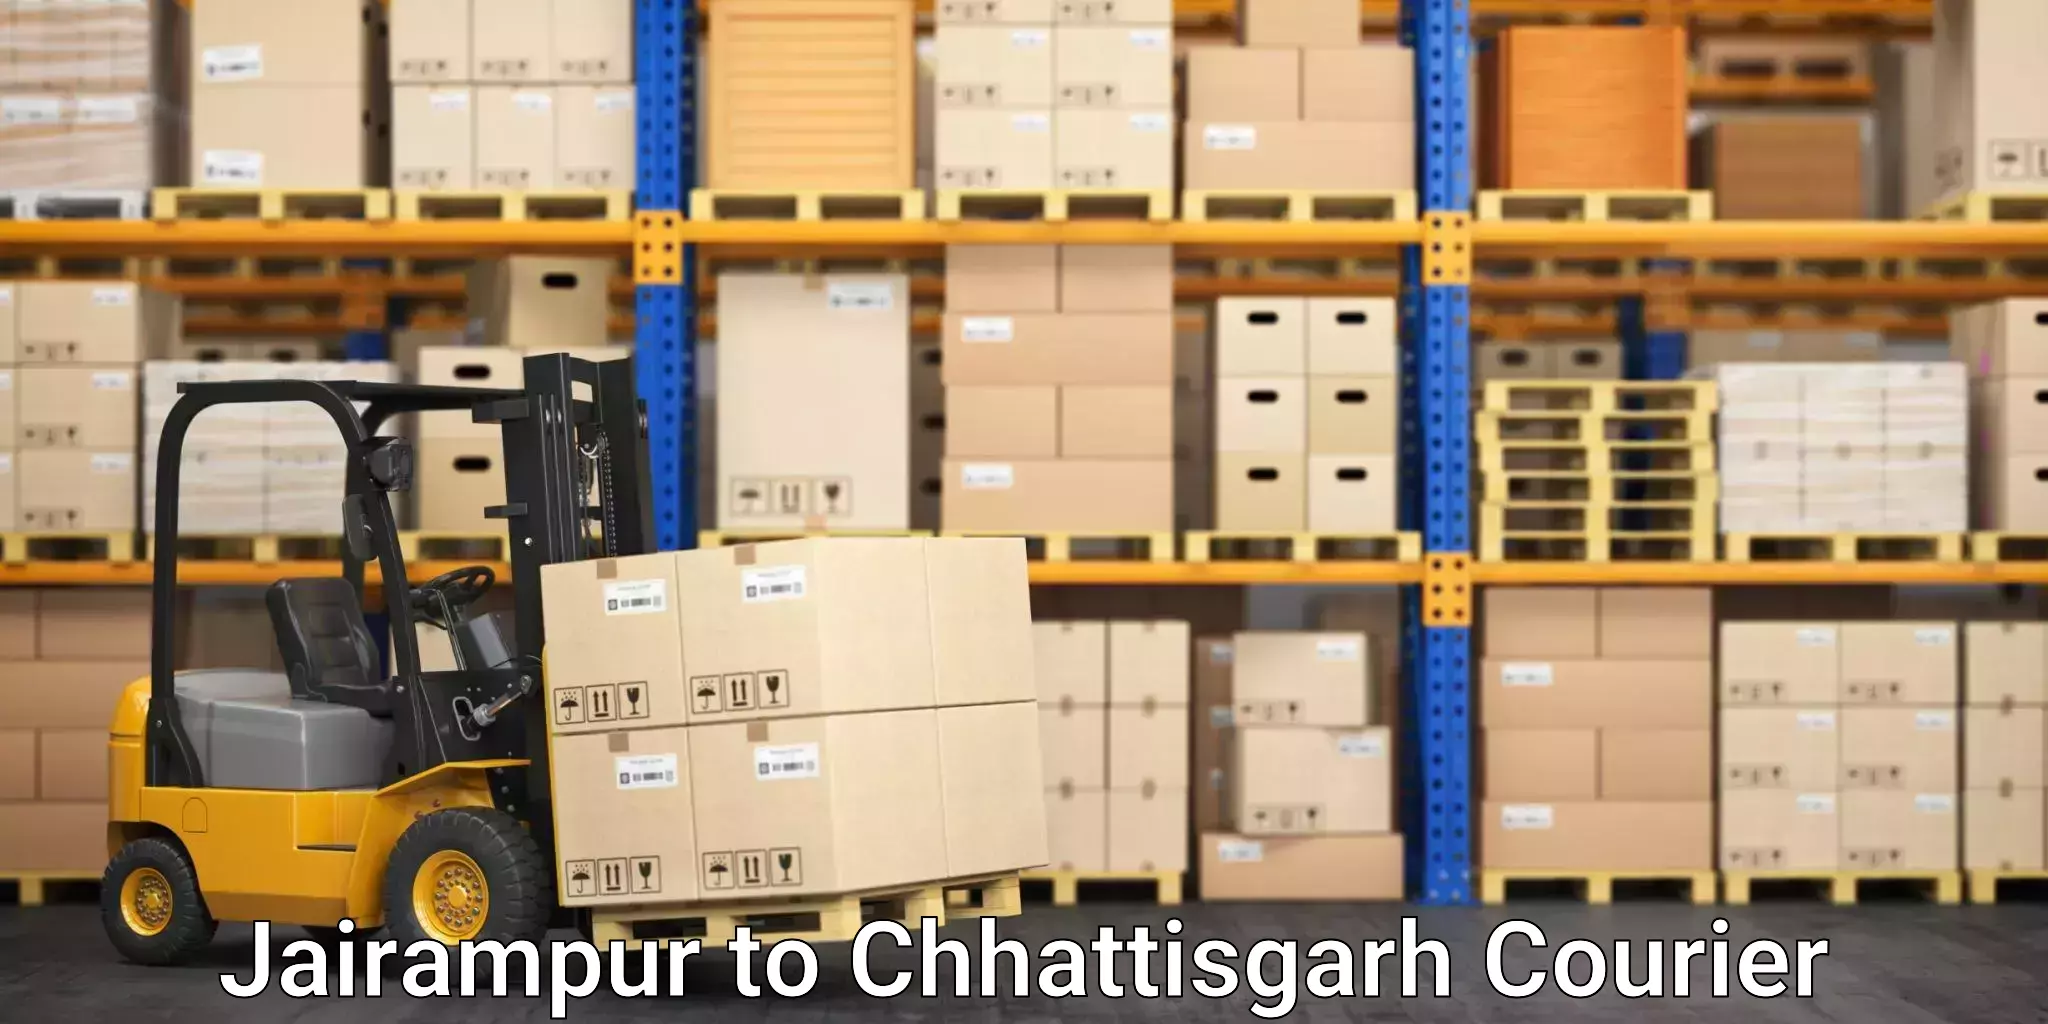 24/7 courier service in Jairampur to Raigarh Chhattisgarh